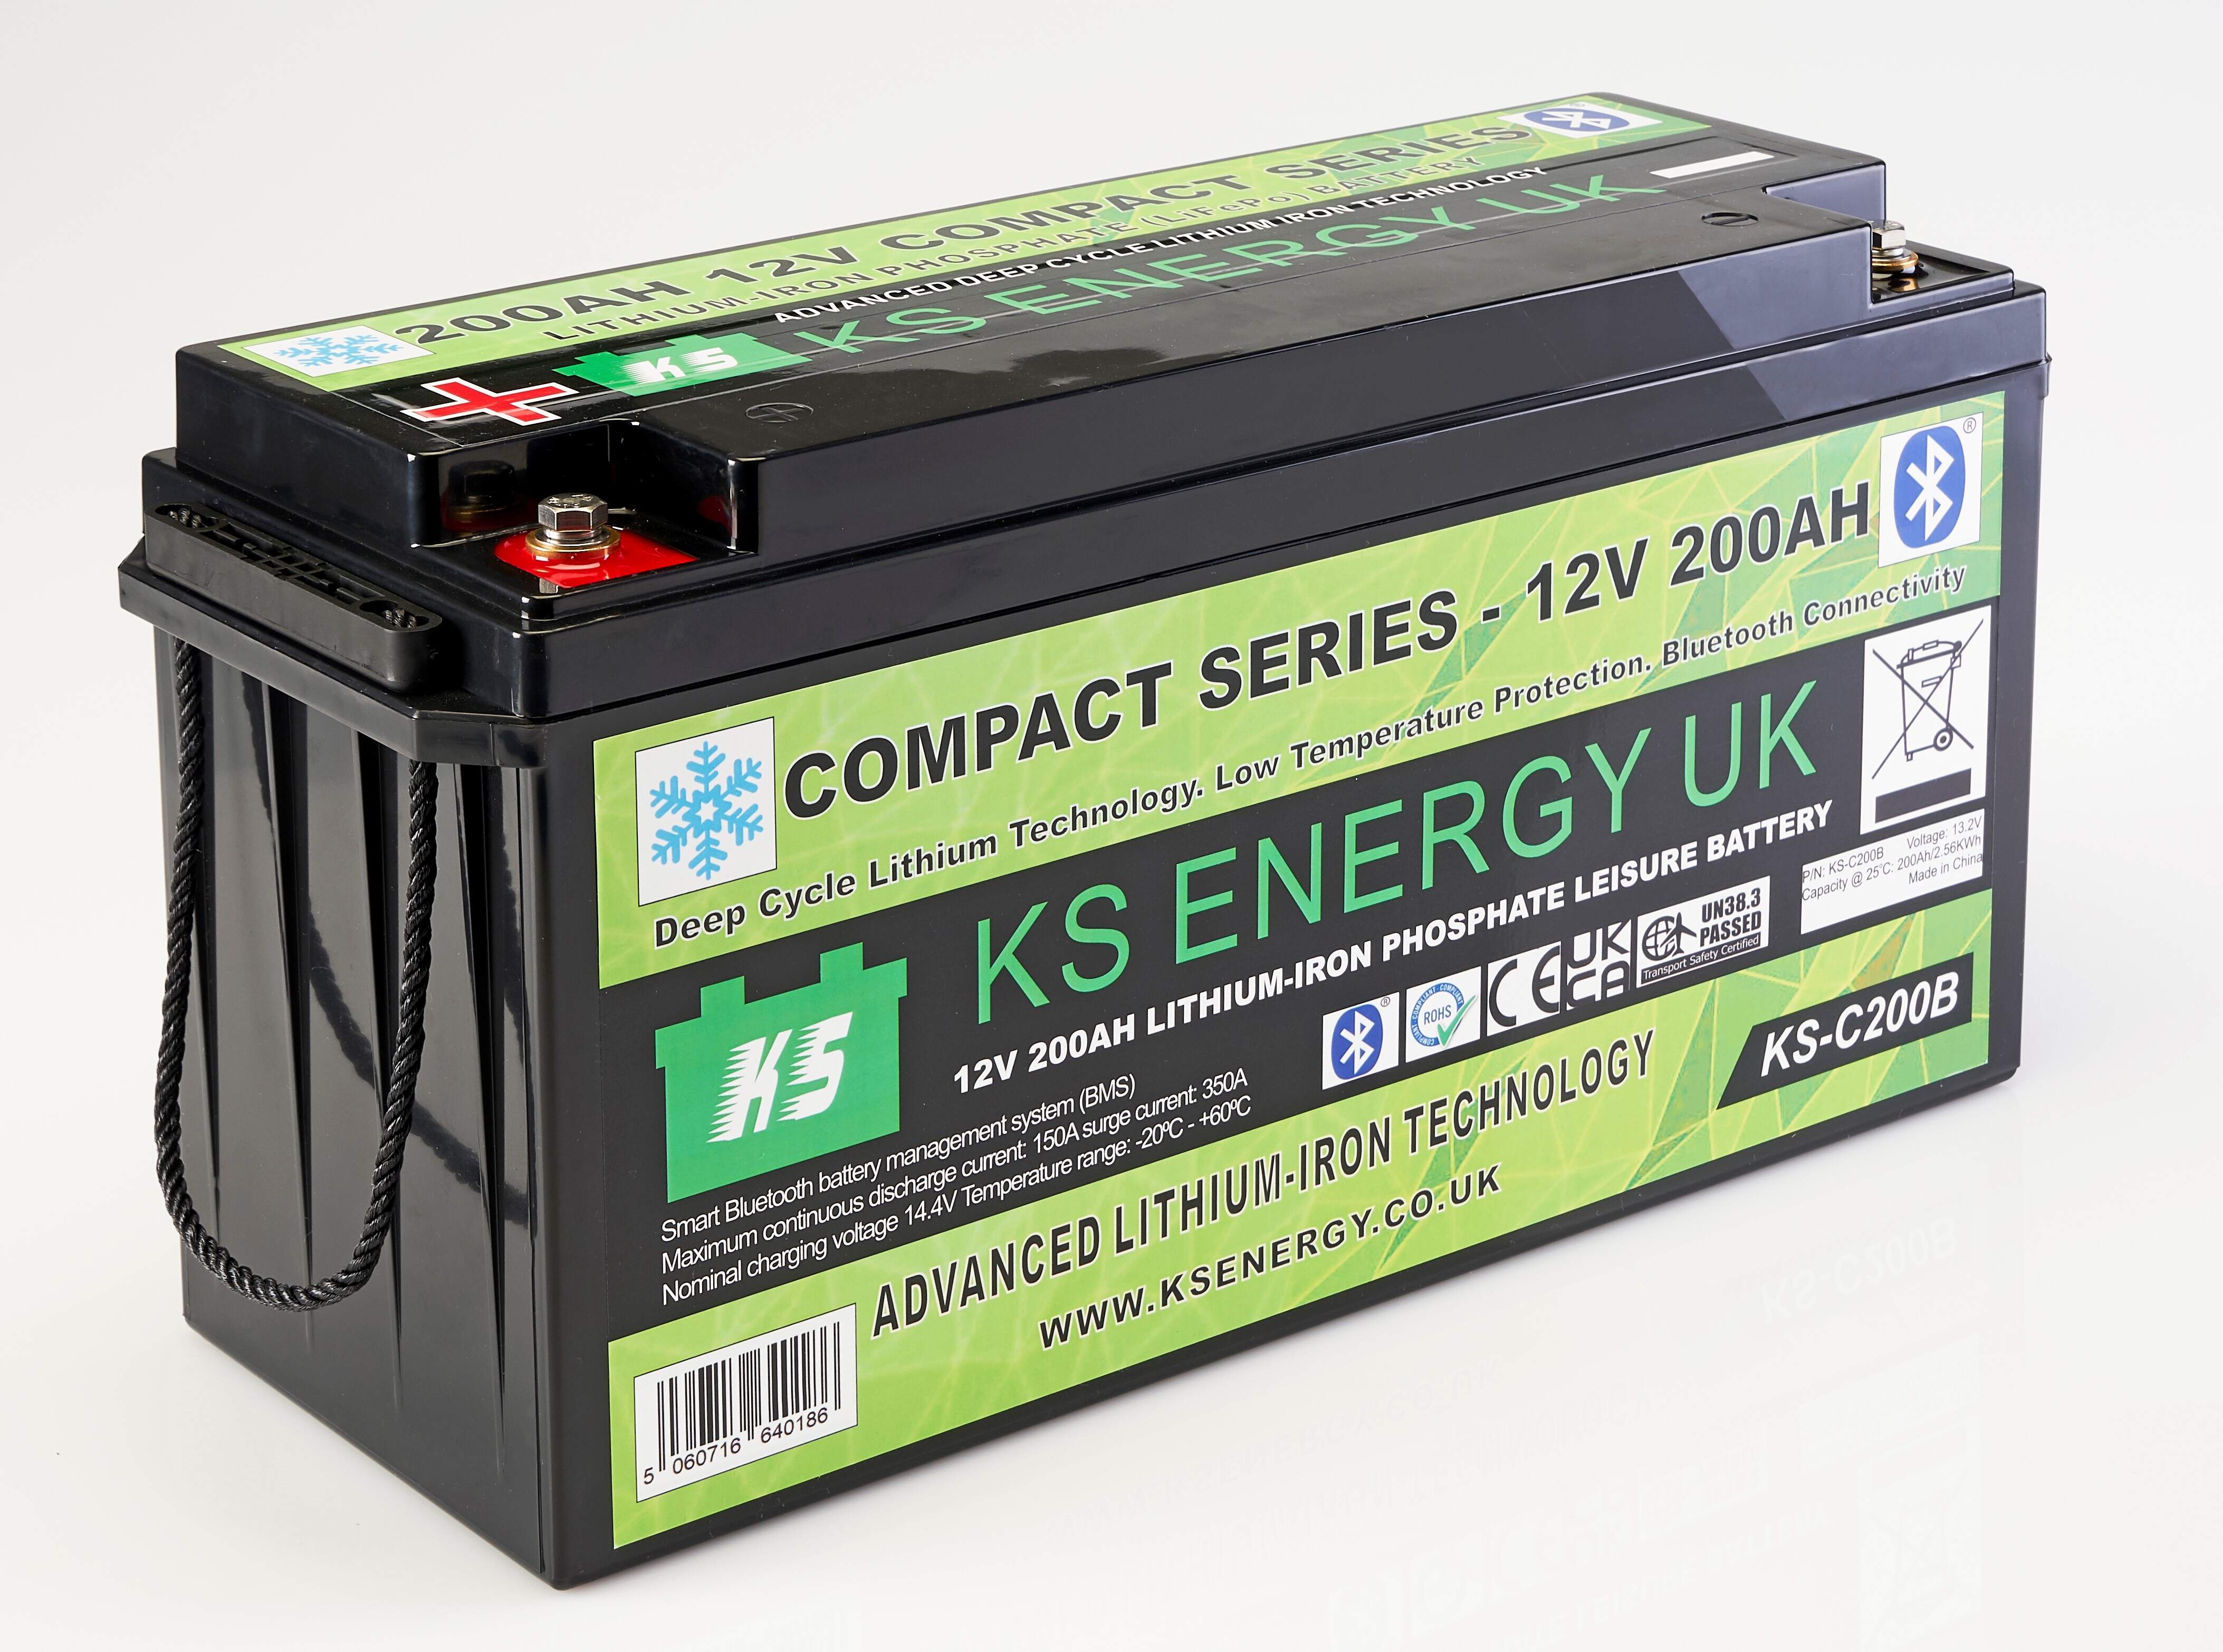 Compact high density 200AH lithium battery